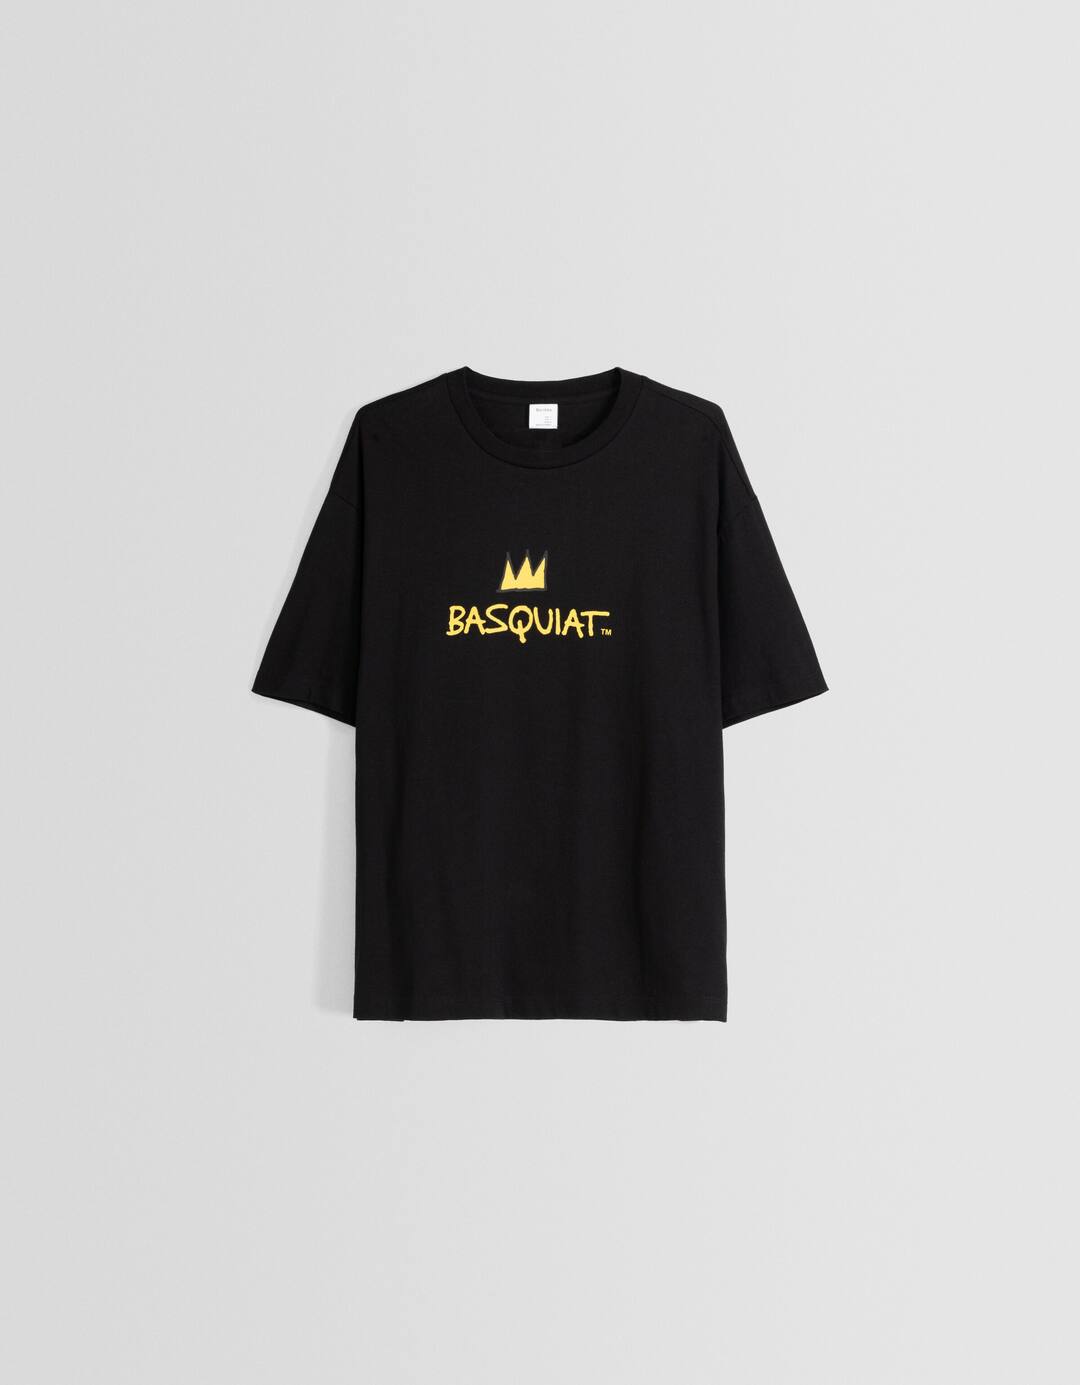 Camiseta Jean-Michel Basquiat manga corta boxy fit print